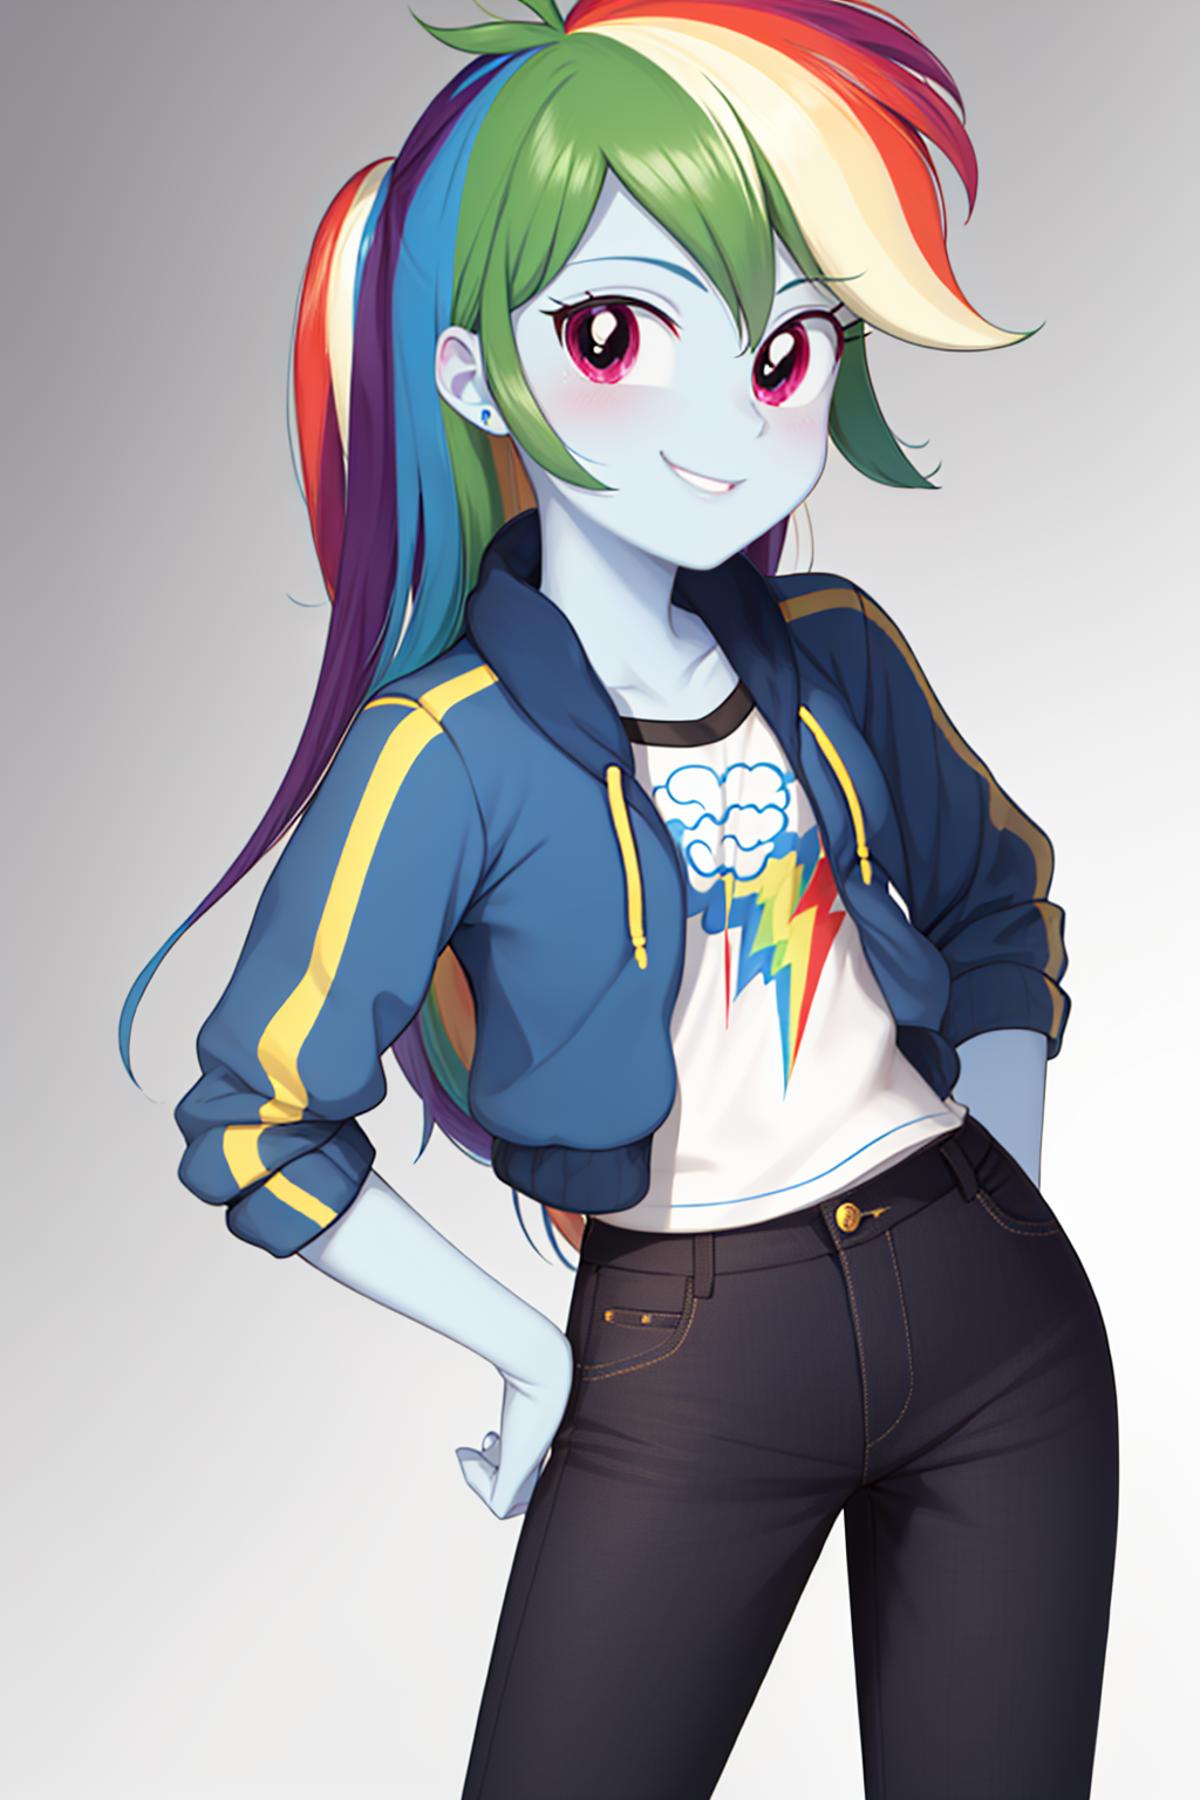 Rainbow Dash | My Little Pony / Equestria Girls image by justTNP